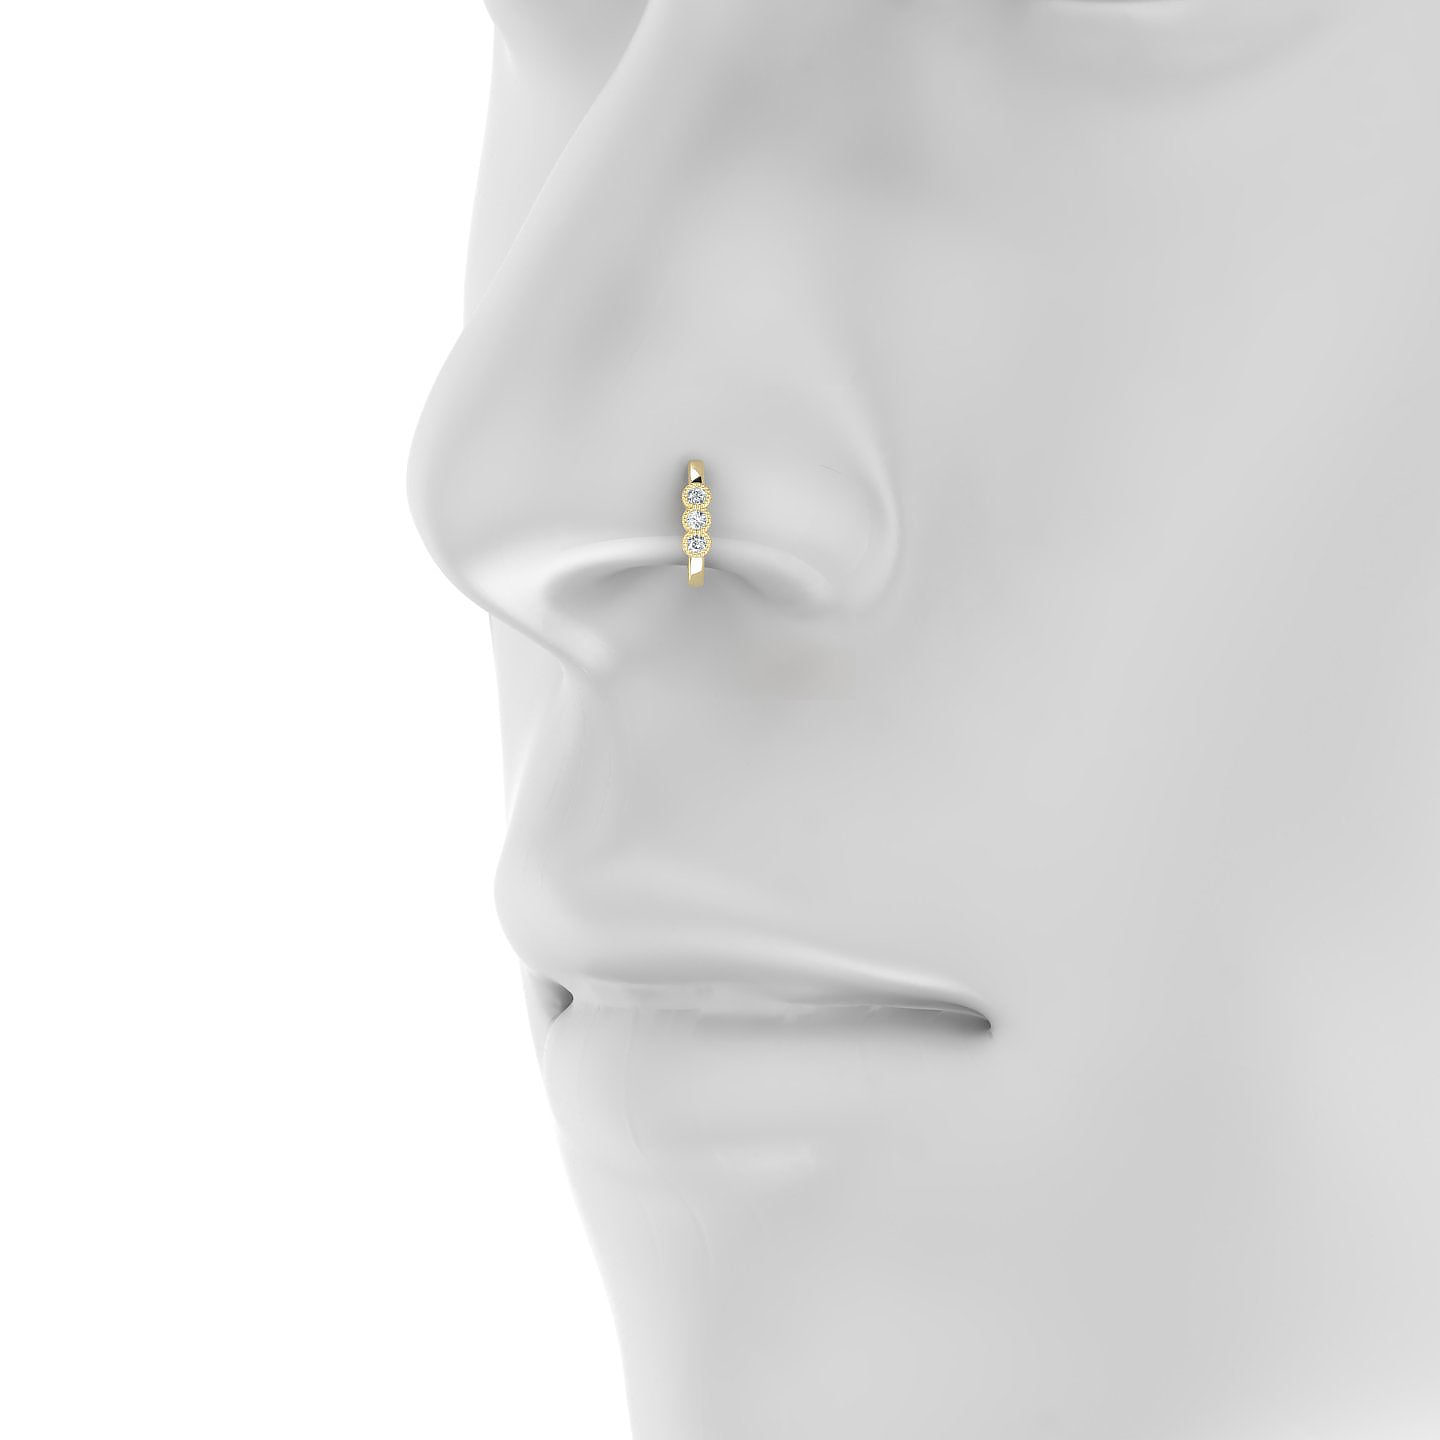 Irene | 18k Yellow Gold 8 mm Trilogy Diamond Nose Ring Piercing